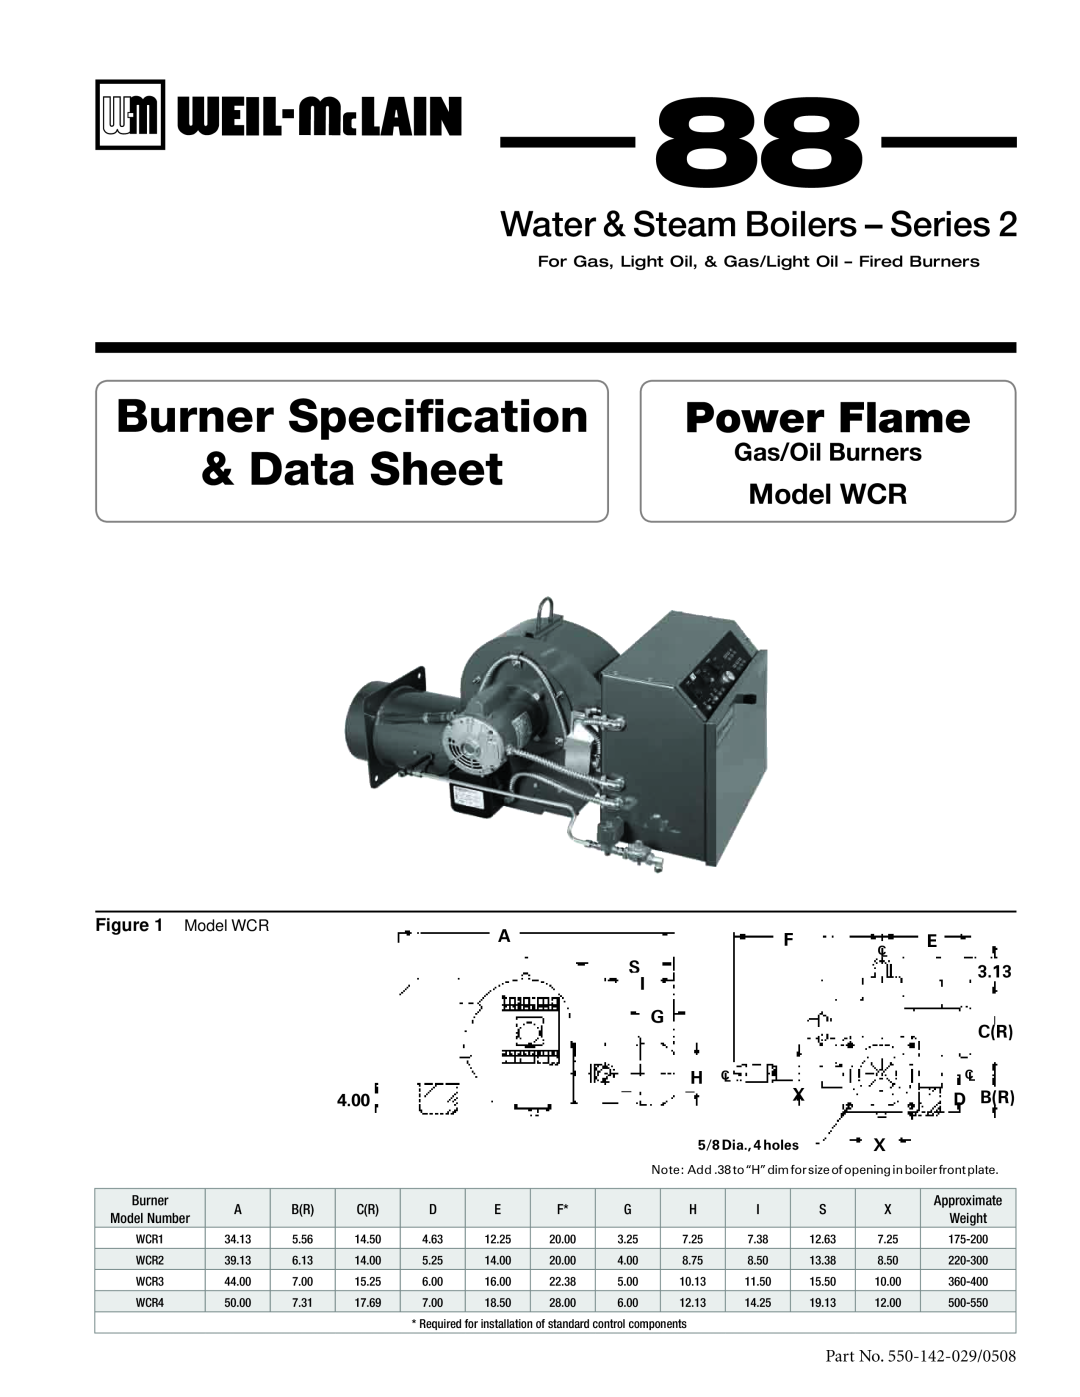 Weil-McLain Gas Burner manual Model WCR, Burner Specification & Data Sheet, Power Flame, Water & Steam Boilers - Series 